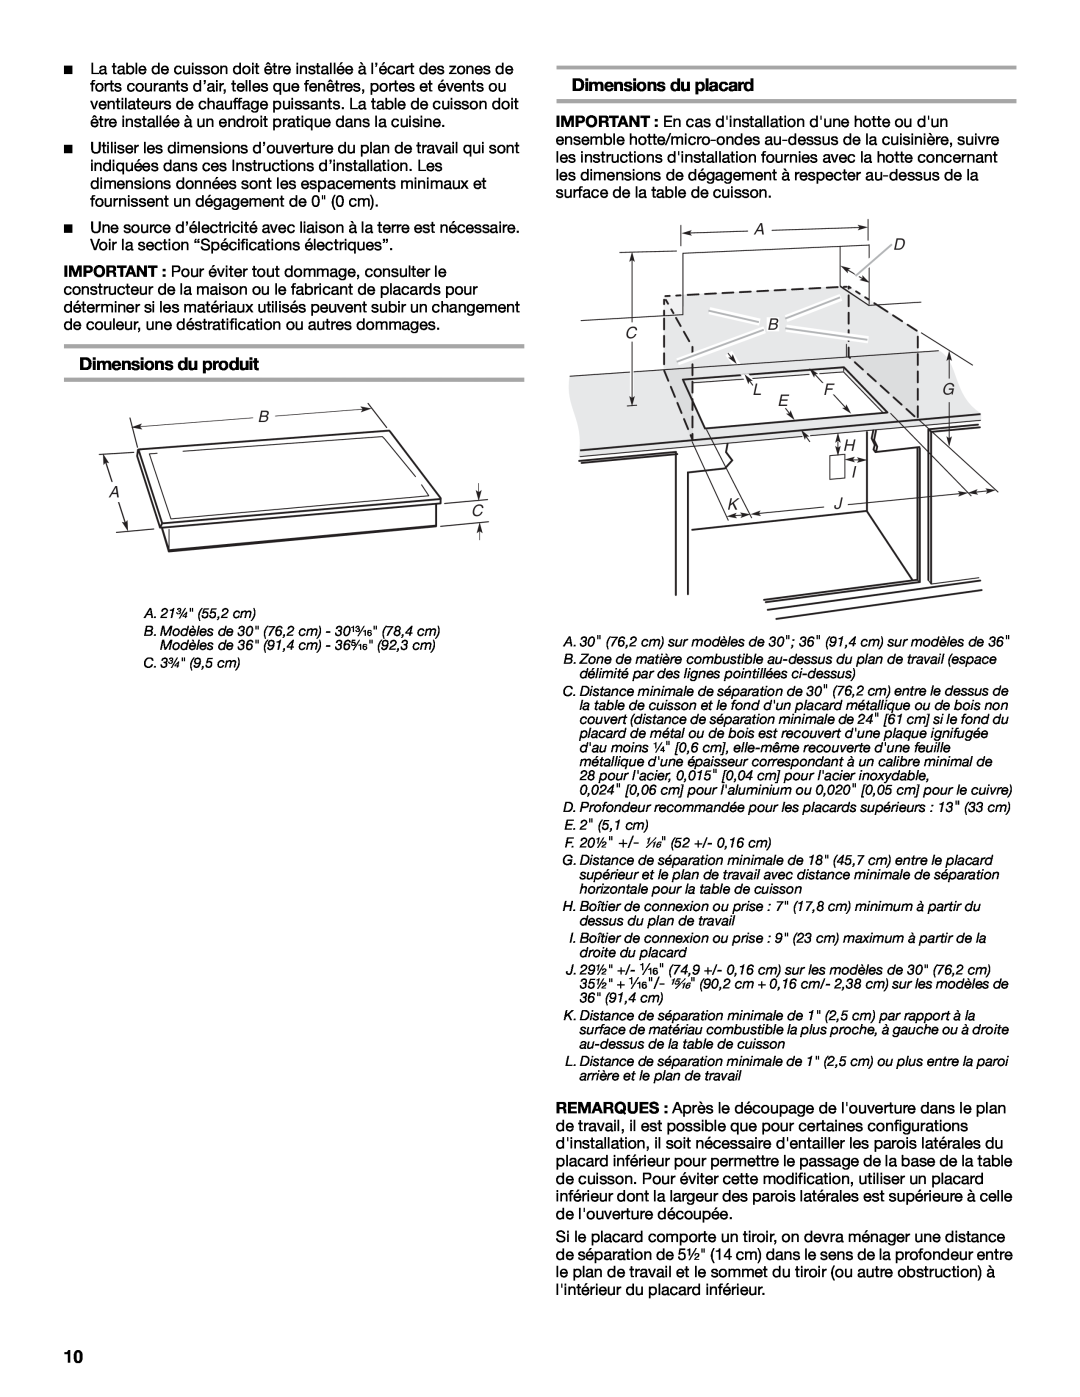 Whirlpool W10346695A installation instructions Dimensions du produit, Dimensions du placard, B A C, A D C B L Fg E H I Kj 